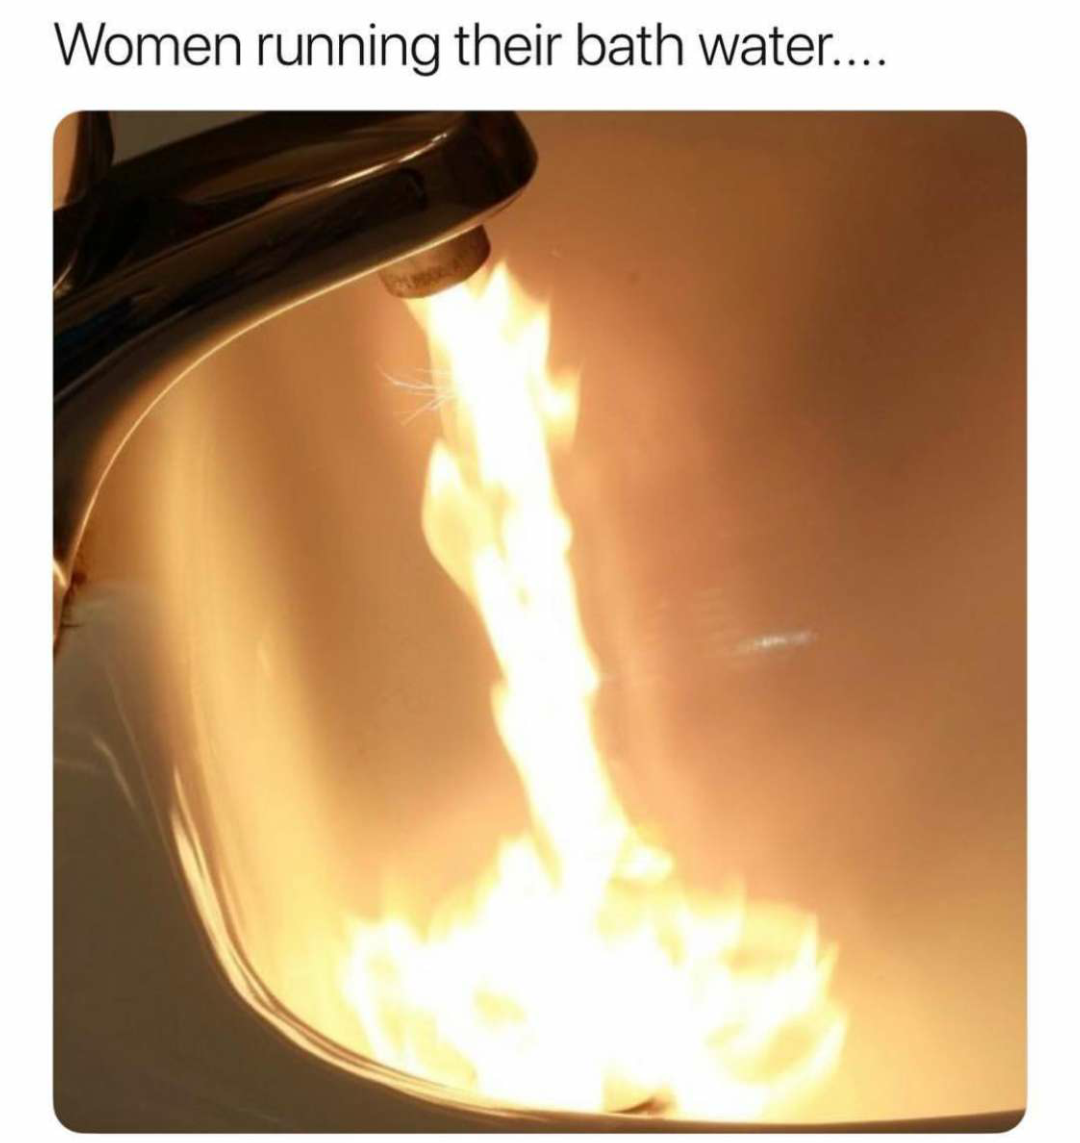 relatable memes - women running their bath water - Women running their bath water....